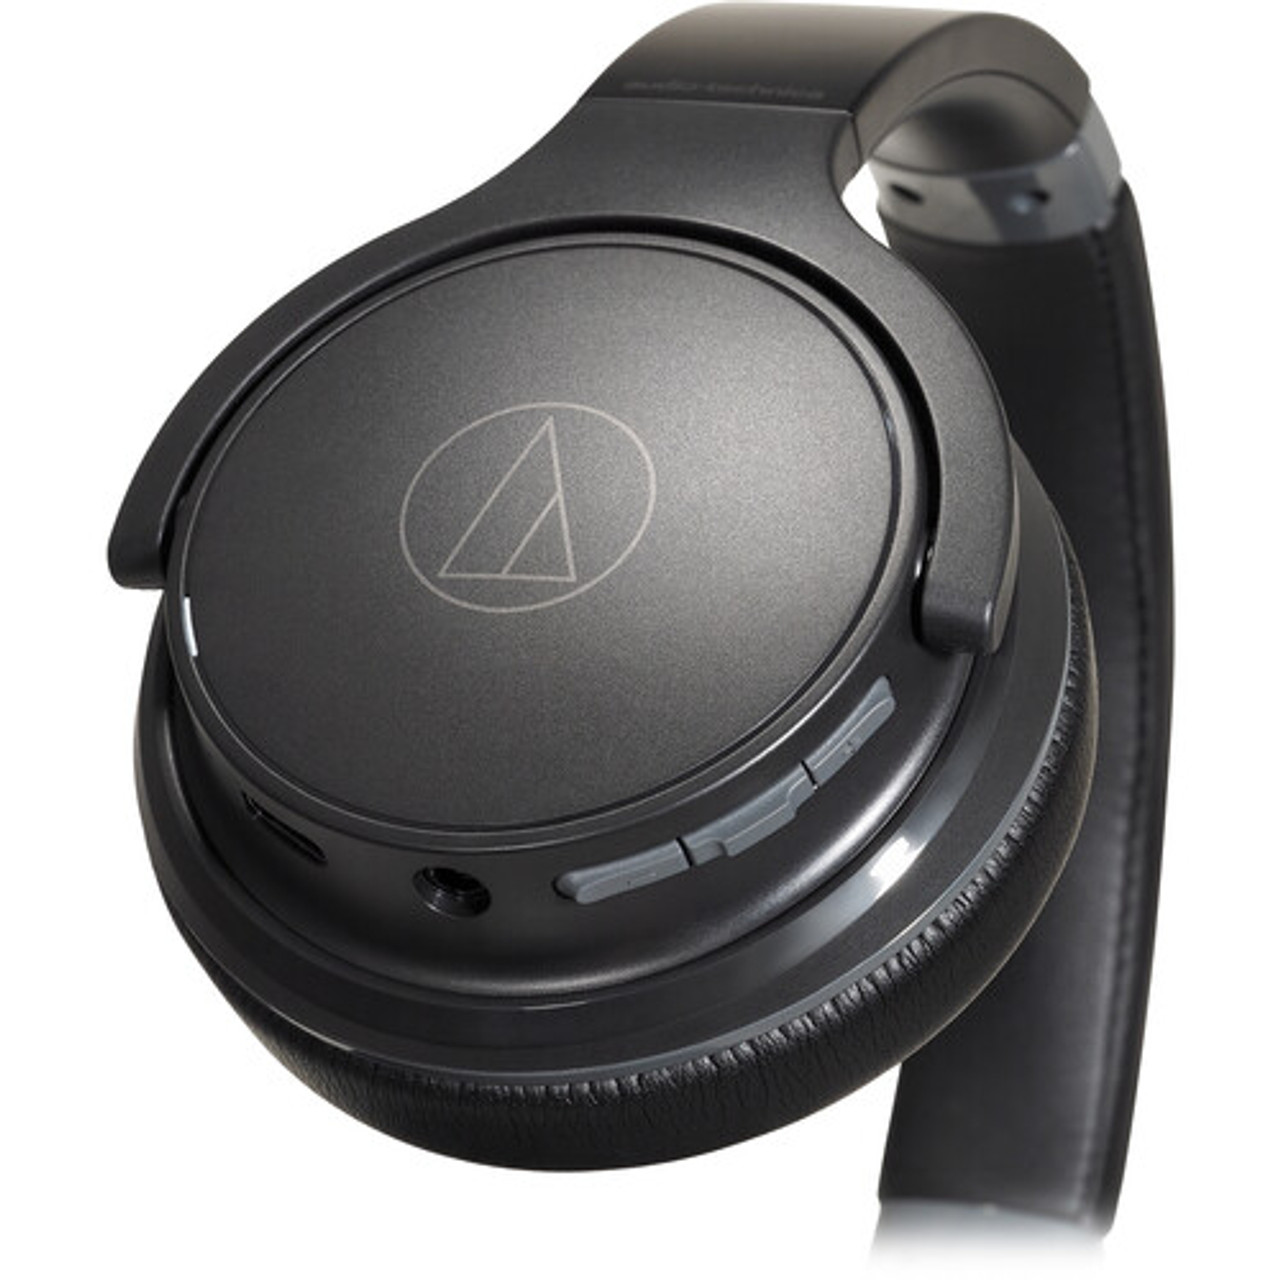 Audio-Technica ATH-S220BT Wireless On-Ear Headphones, Black (ATH-S220BTBK)